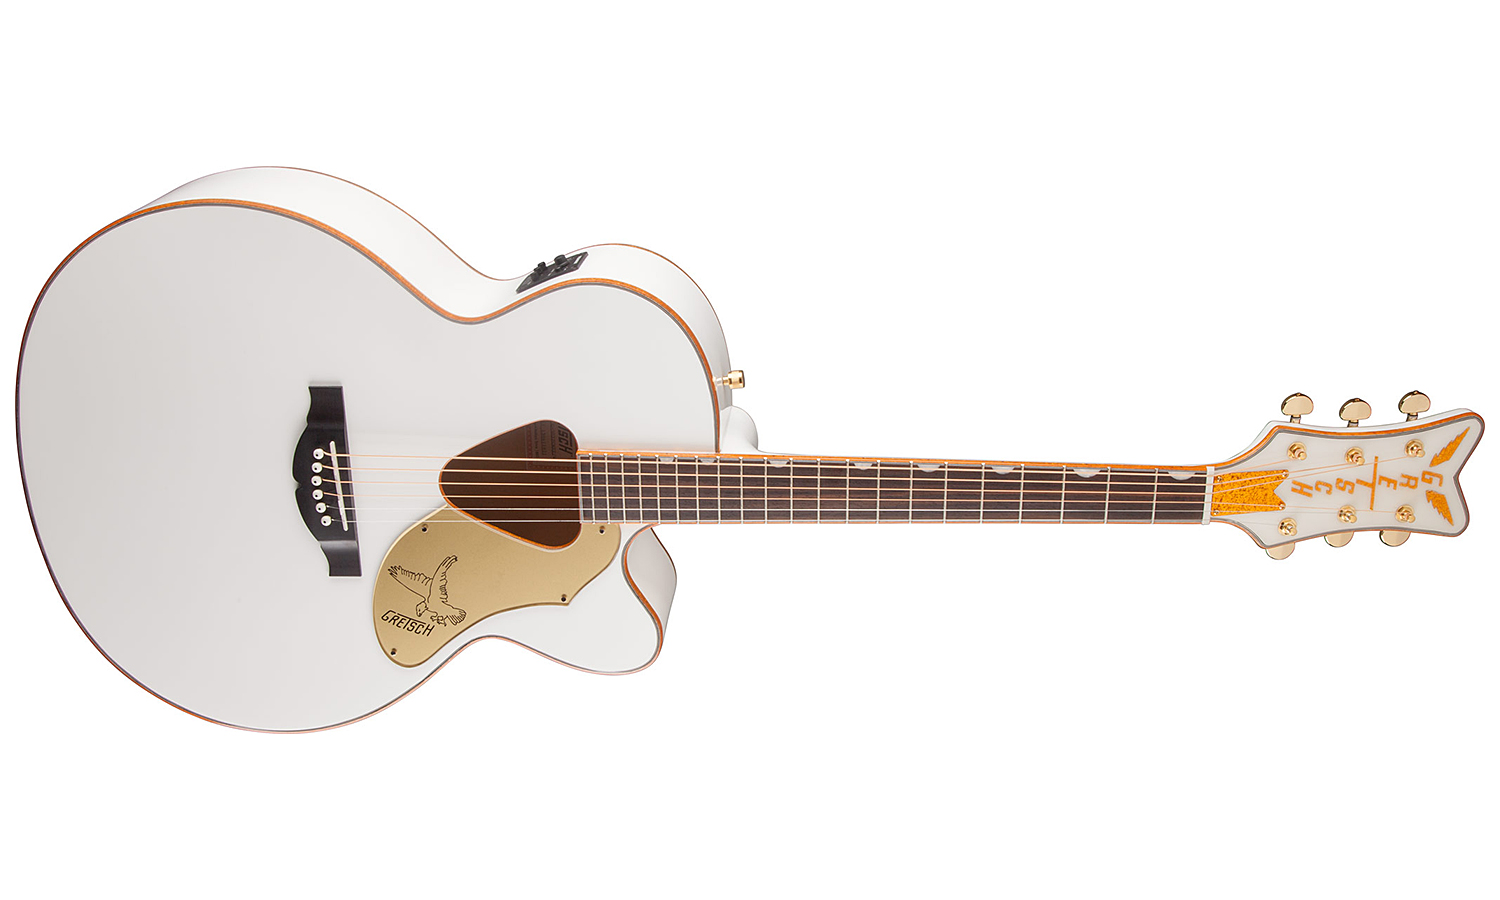 Gretsch G5022cwfe Rancher Falcon Jumbo Cw Epicea Erable Rw - White - Electro acoustic guitar - Variation 1